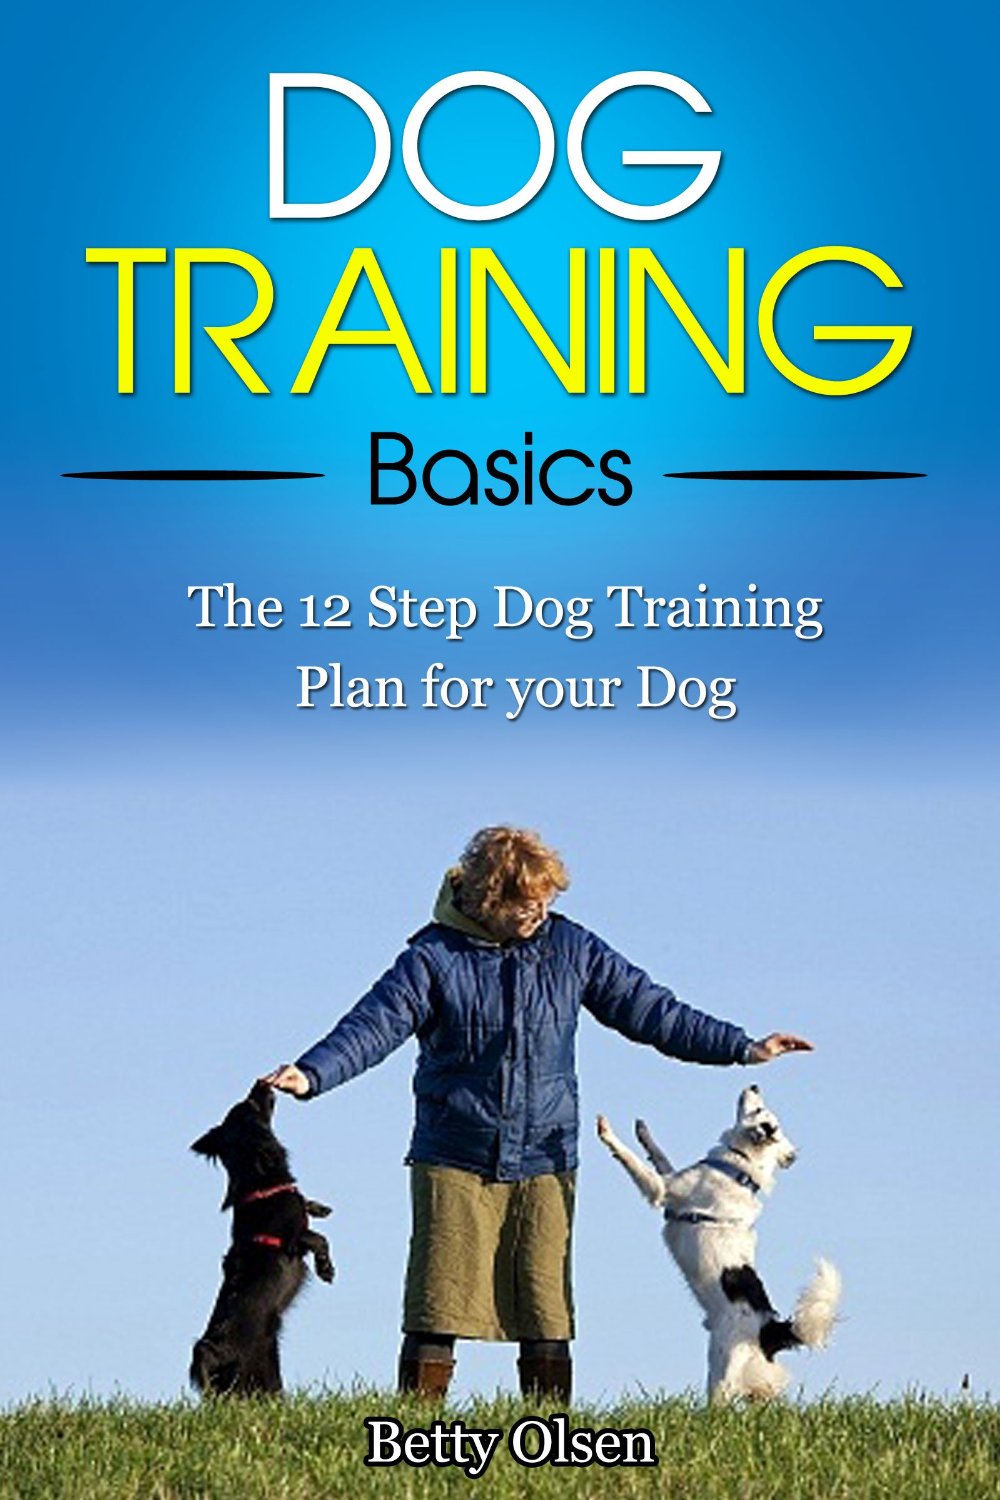 Dog Training Basics: The 12 Step Dog Training Plan for your Dog by Betty Olsen